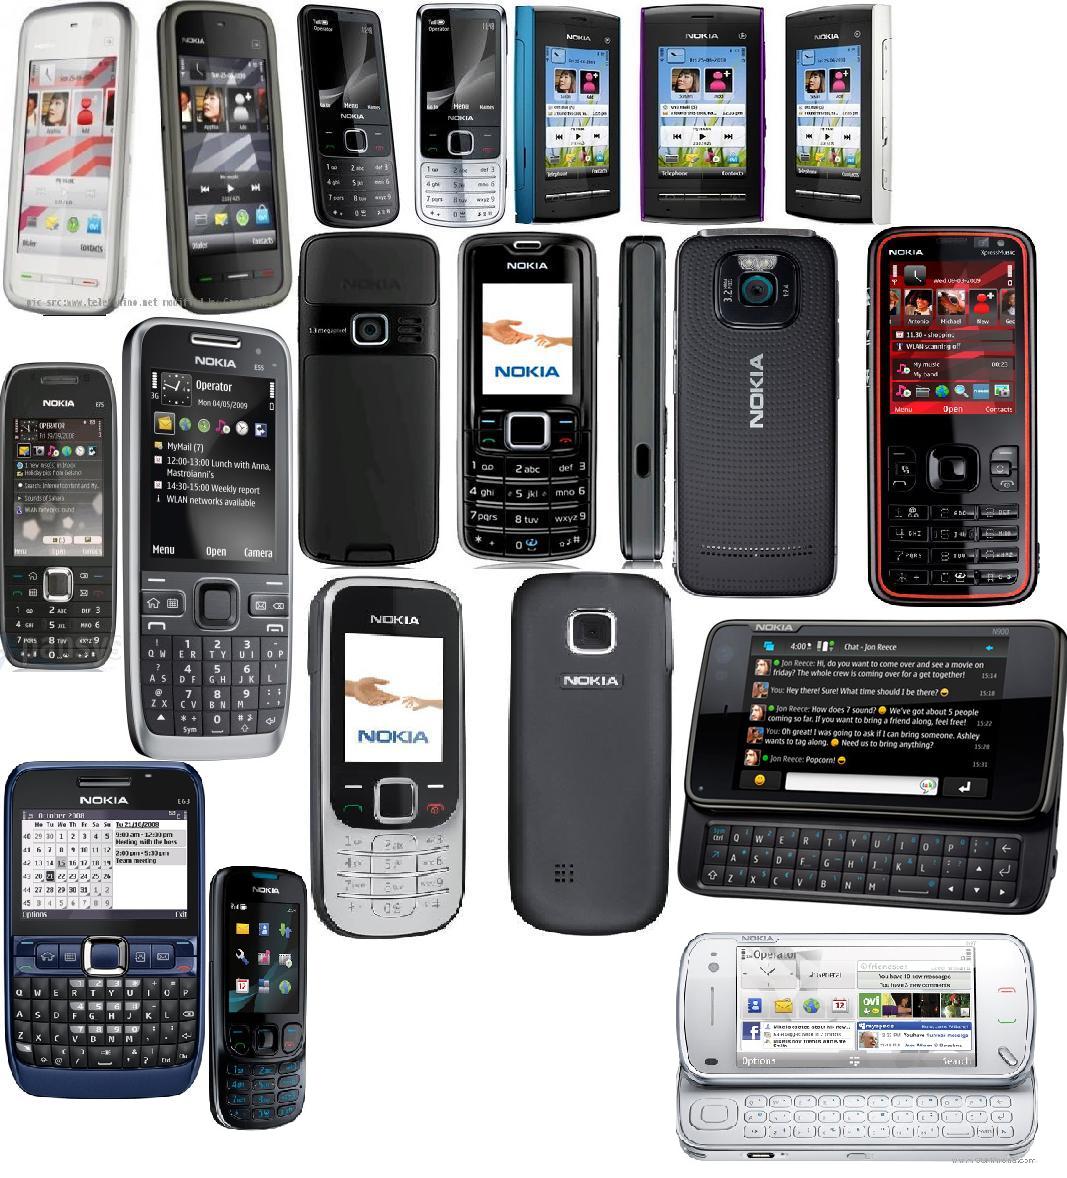 Nokia Phones Pictures 6